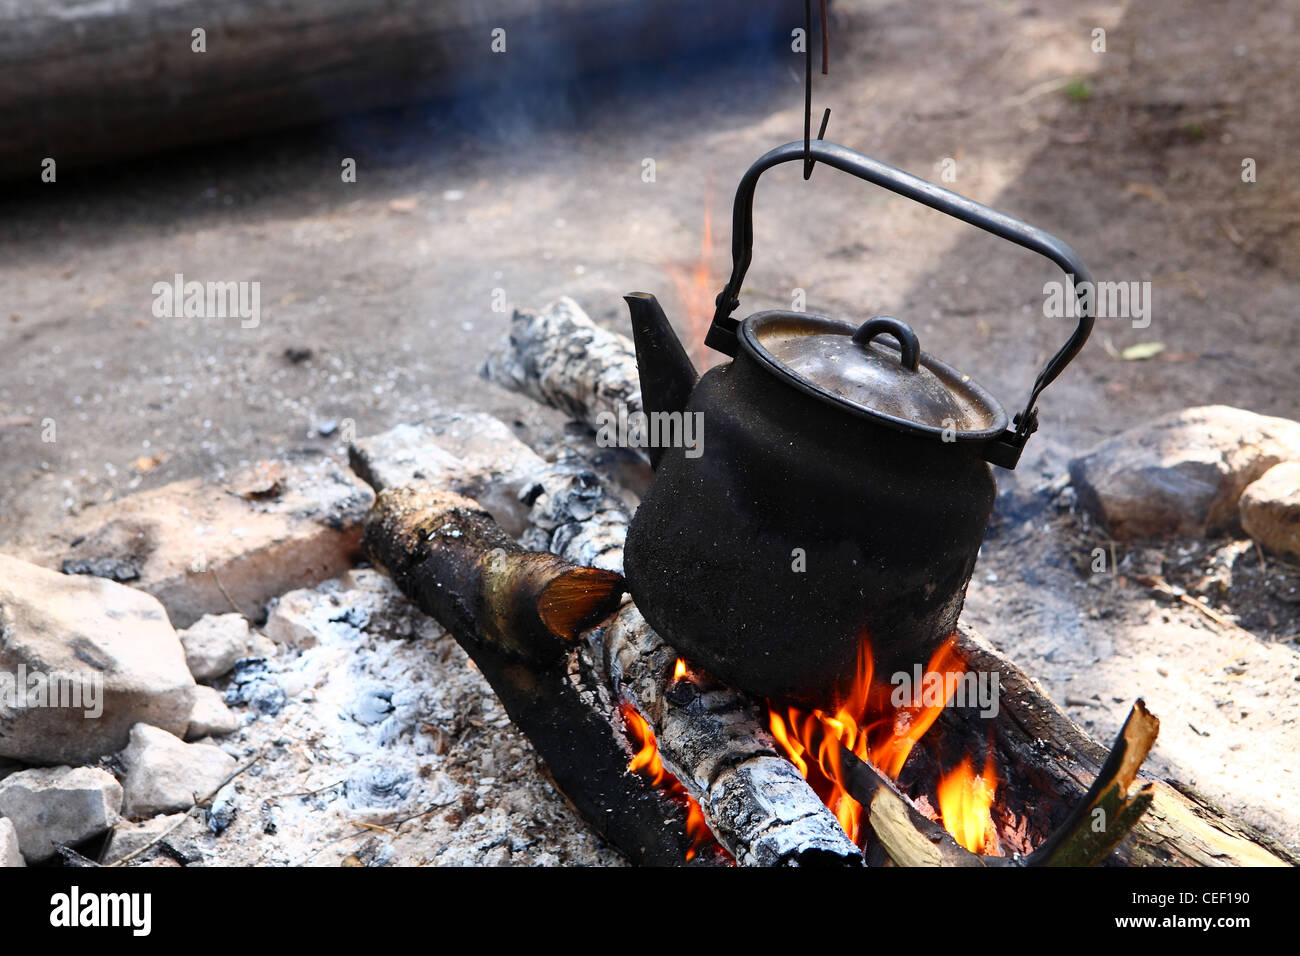 Teekessel auf dem camping Feuer Stockfoto